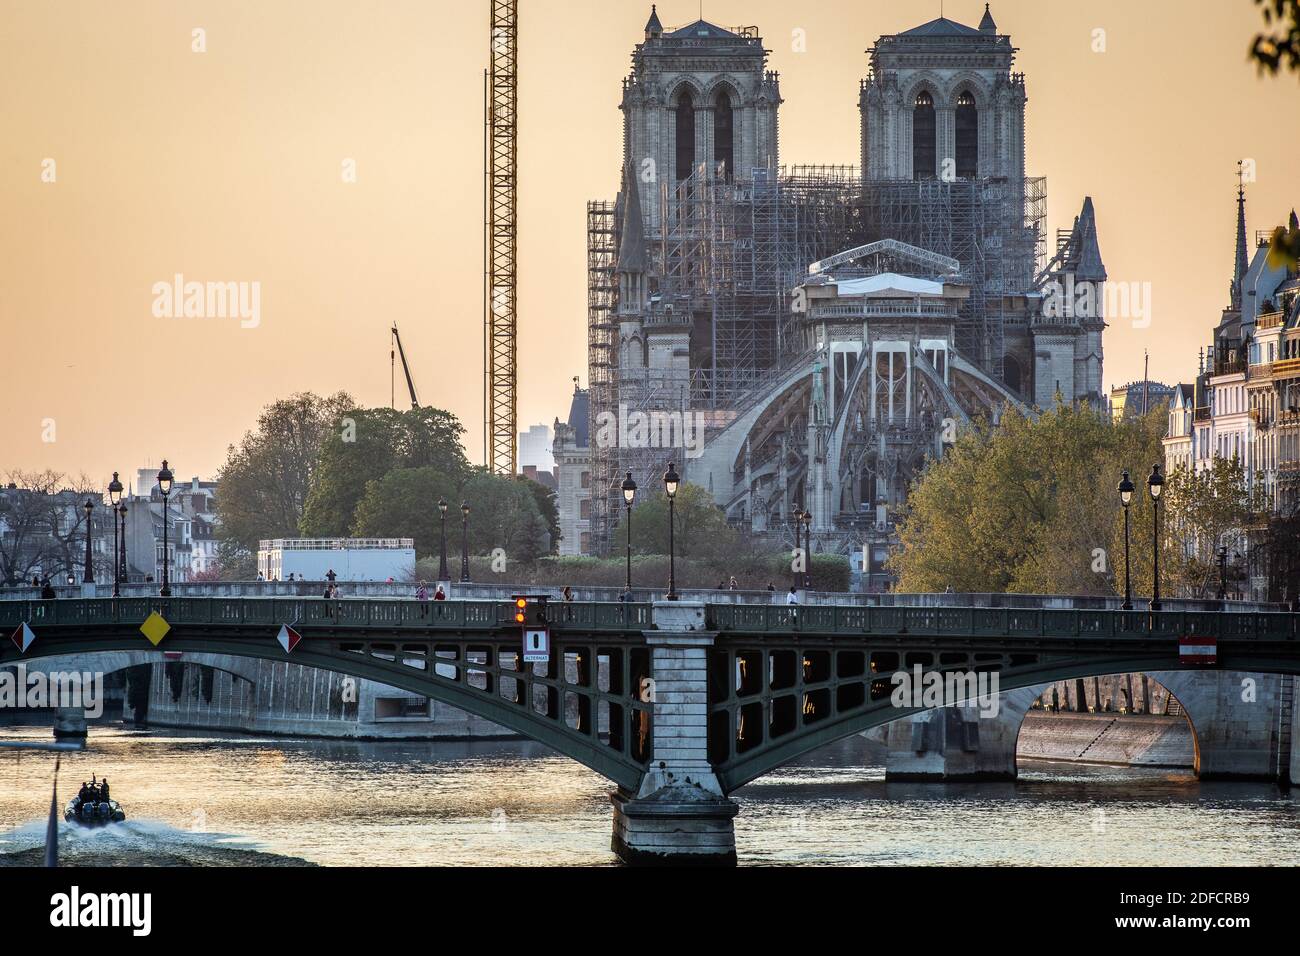 1 YEAR AFTER THE FIRE, THE NOTRE DAME DE PARIS CATHEDRAL RECONSTRUCTION SITE SHUT DOWN DURING THE COVID-19 PANDEMIC LOCKDOWN, PARIS, ILE DE FRANCE Stock Photo